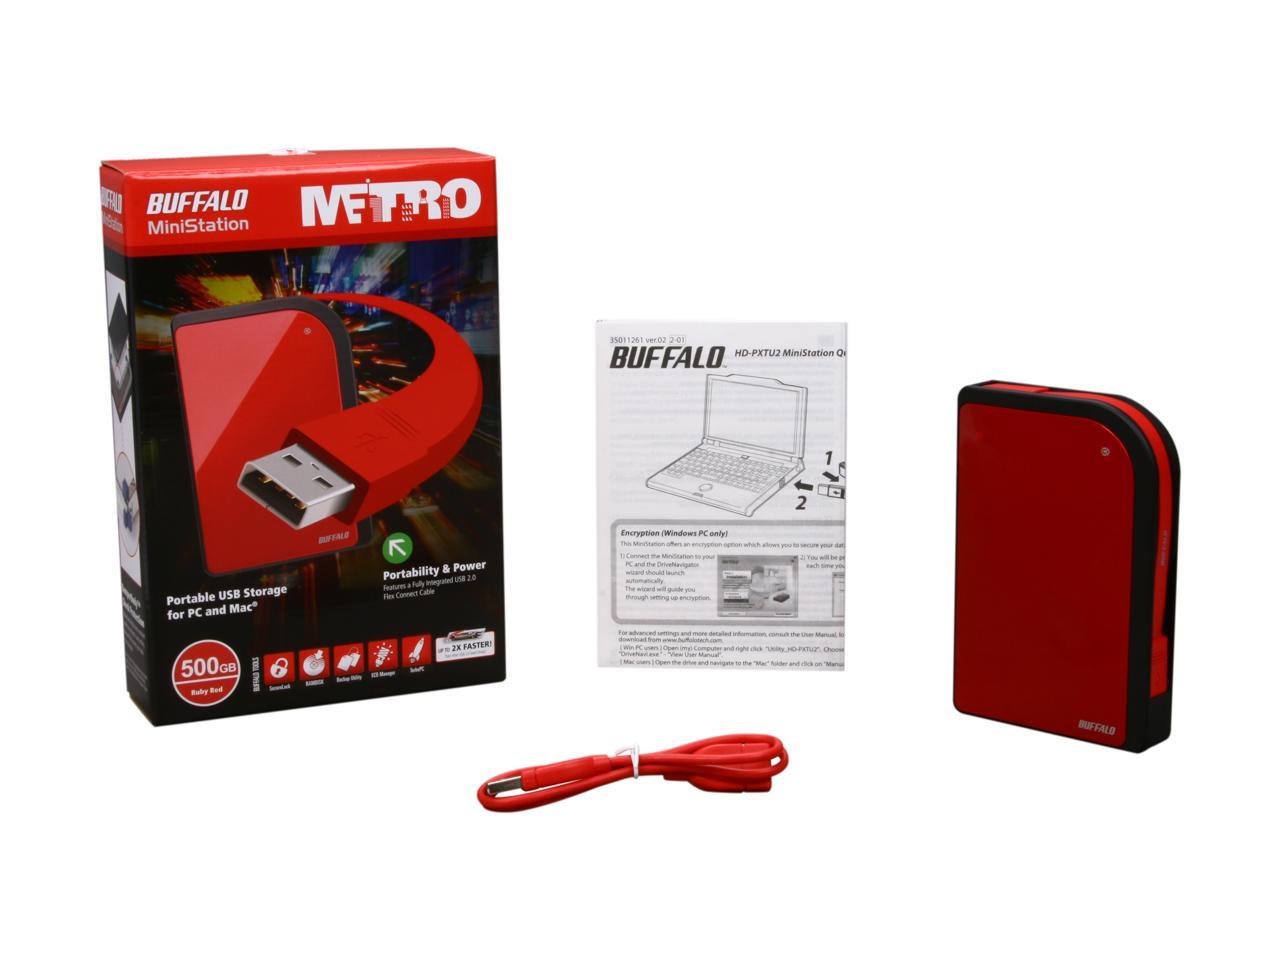 BUFFALO Metro 500GB USB 2.0 2.5" Portable Hard Drive Ruby Red - Newegg.com